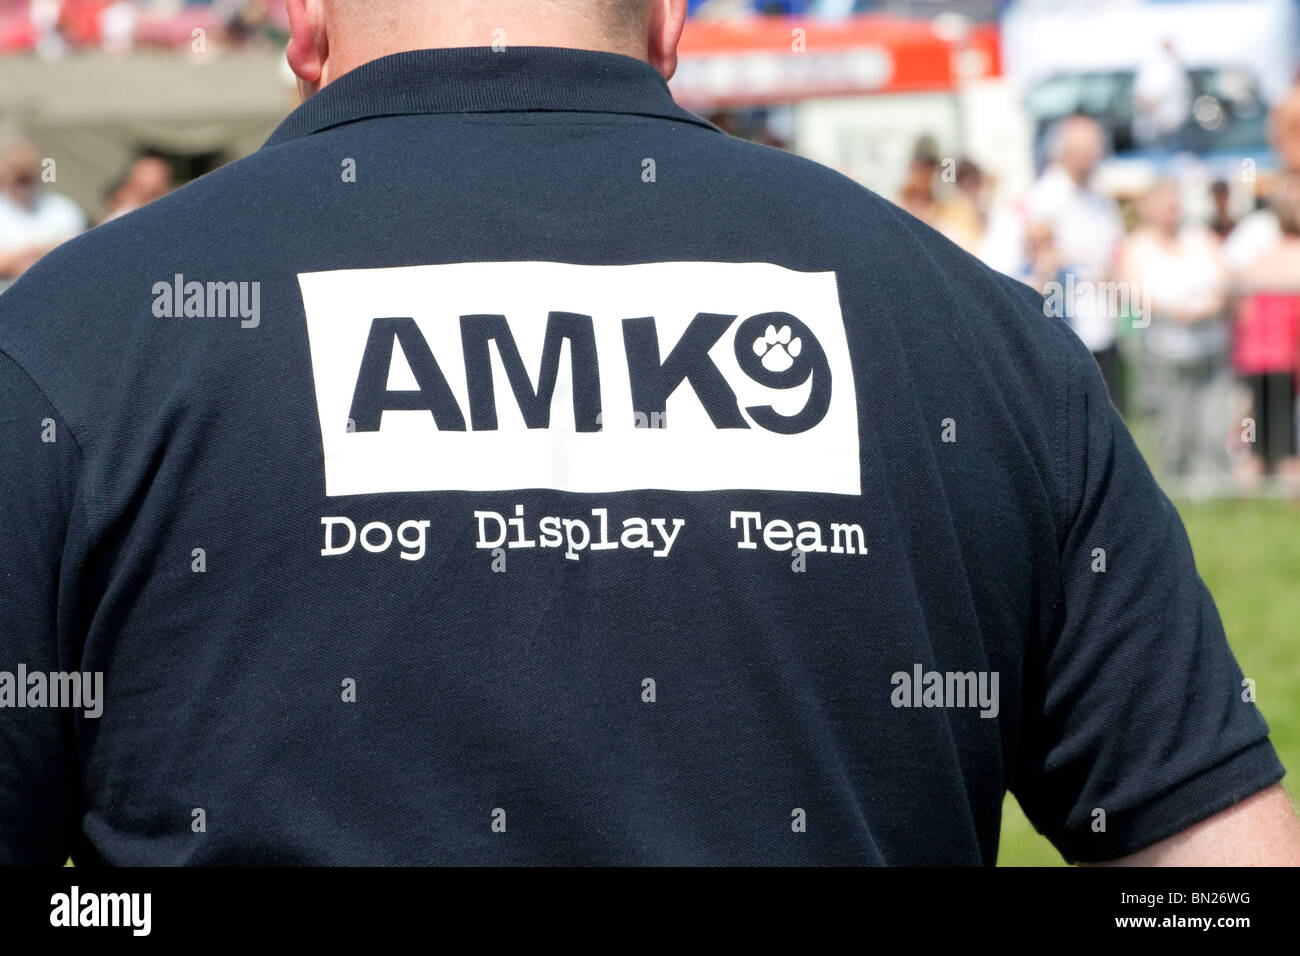 The AMK9 dog display team Stock Photo